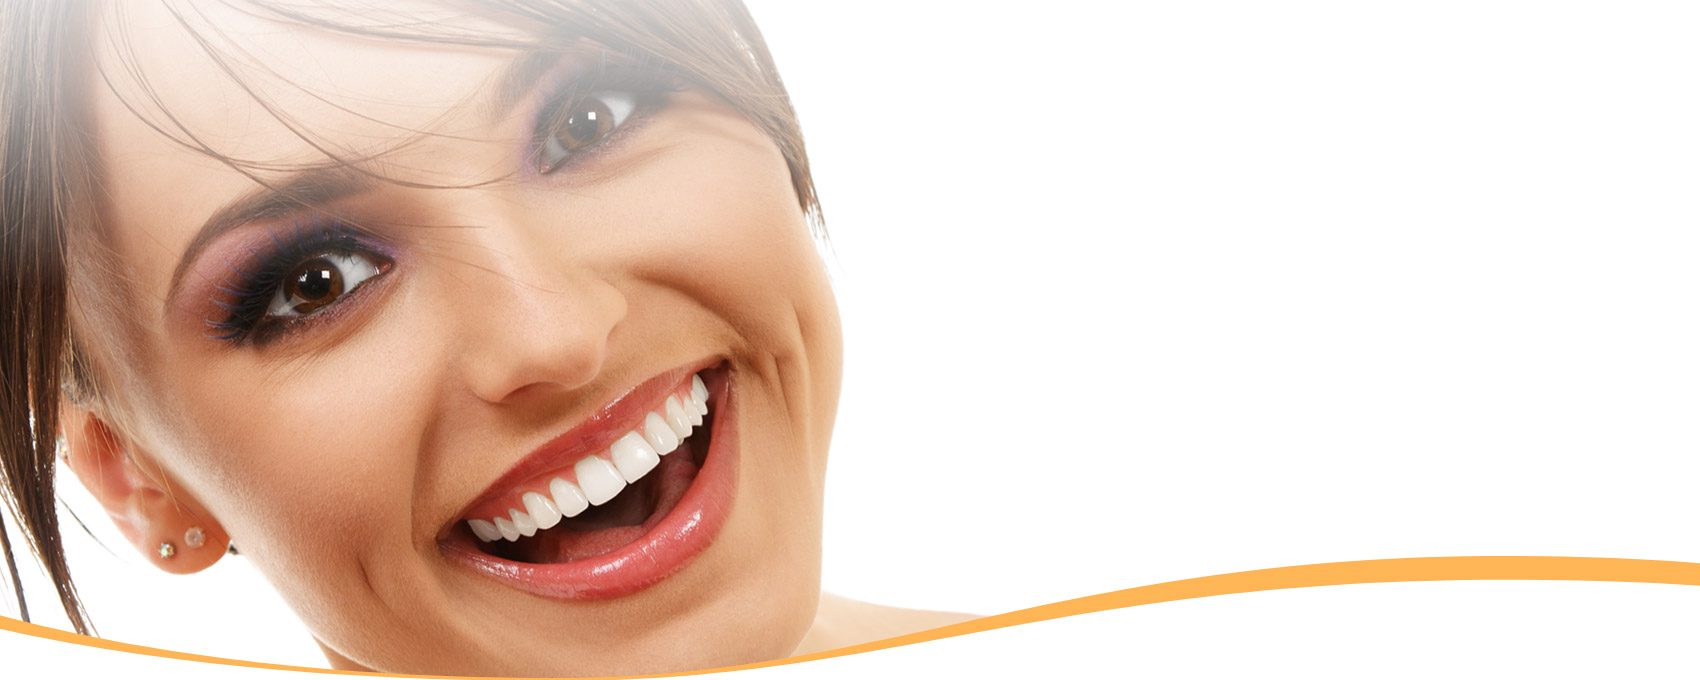 Teeth Whitening - Natalie K. Provenzano DDS, Inc